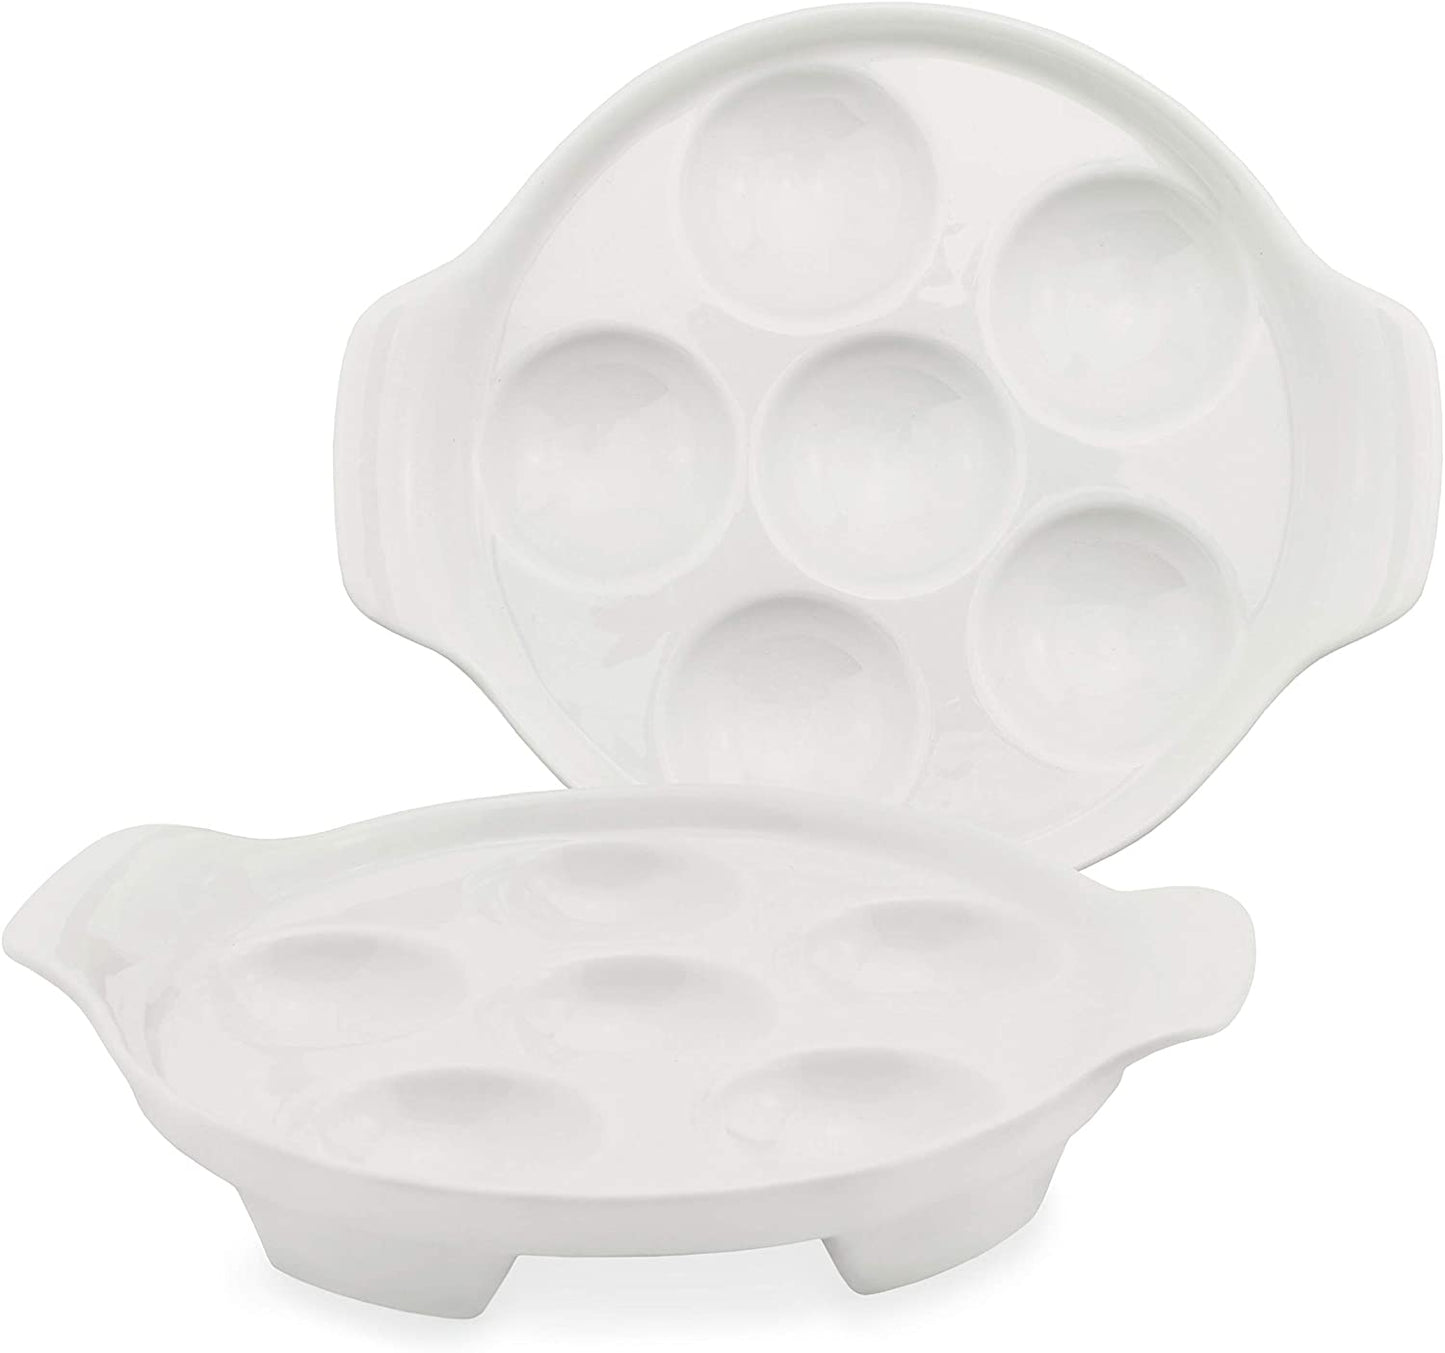 White Ceramic Escargot Plates (2-Pack) - sh1322cb0Snail